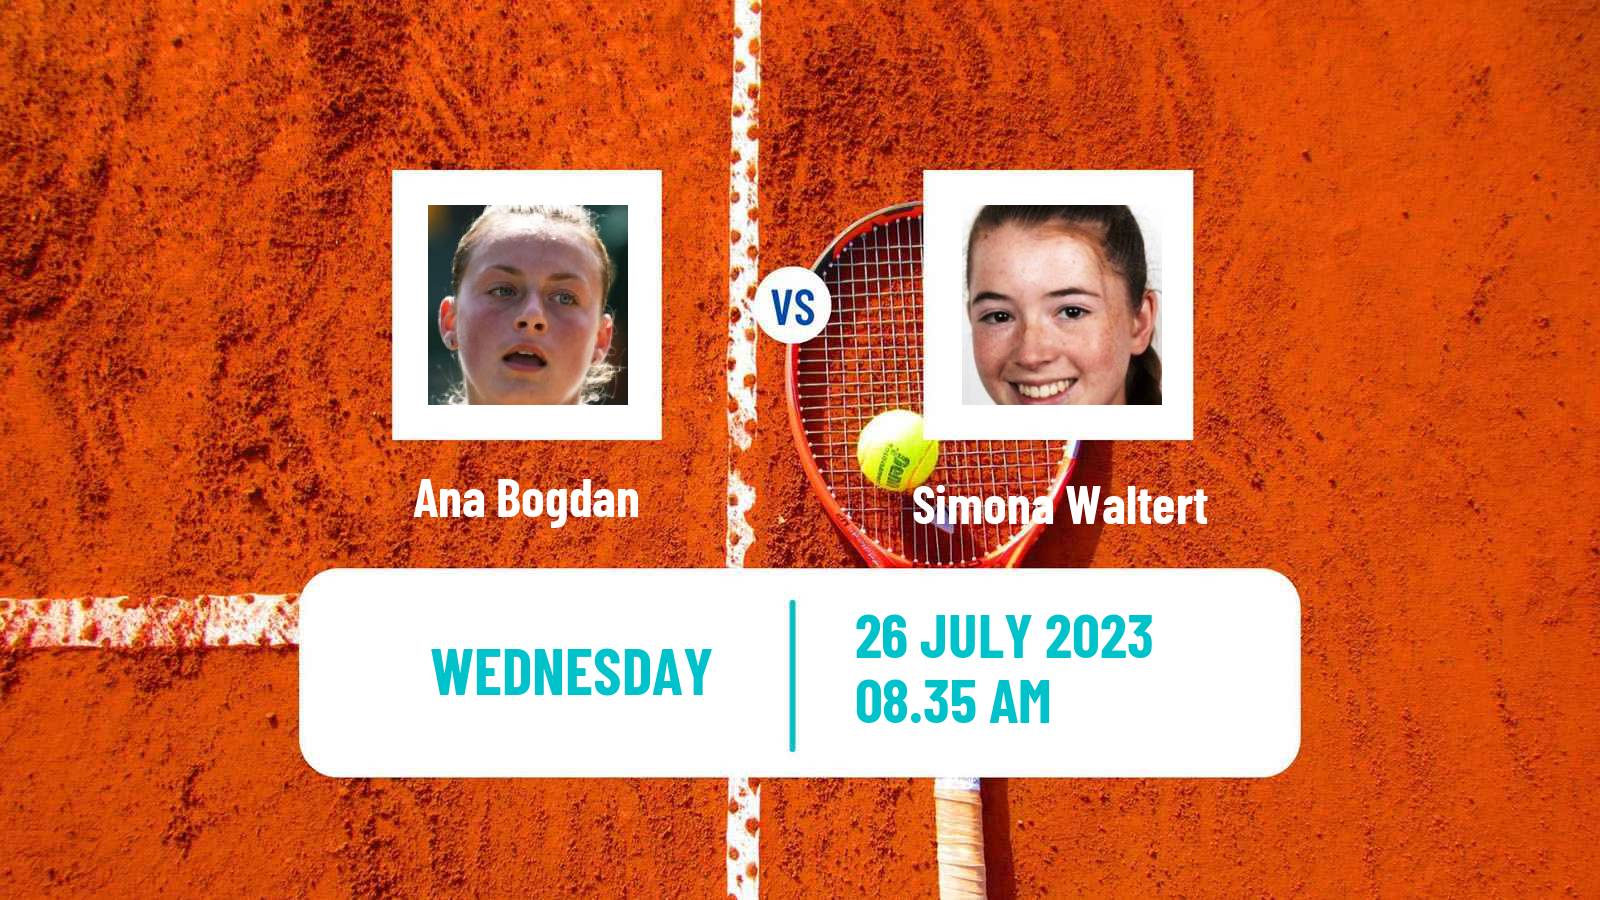 Tennis WTA Lausanne Ana Bogdan - Simona Waltert